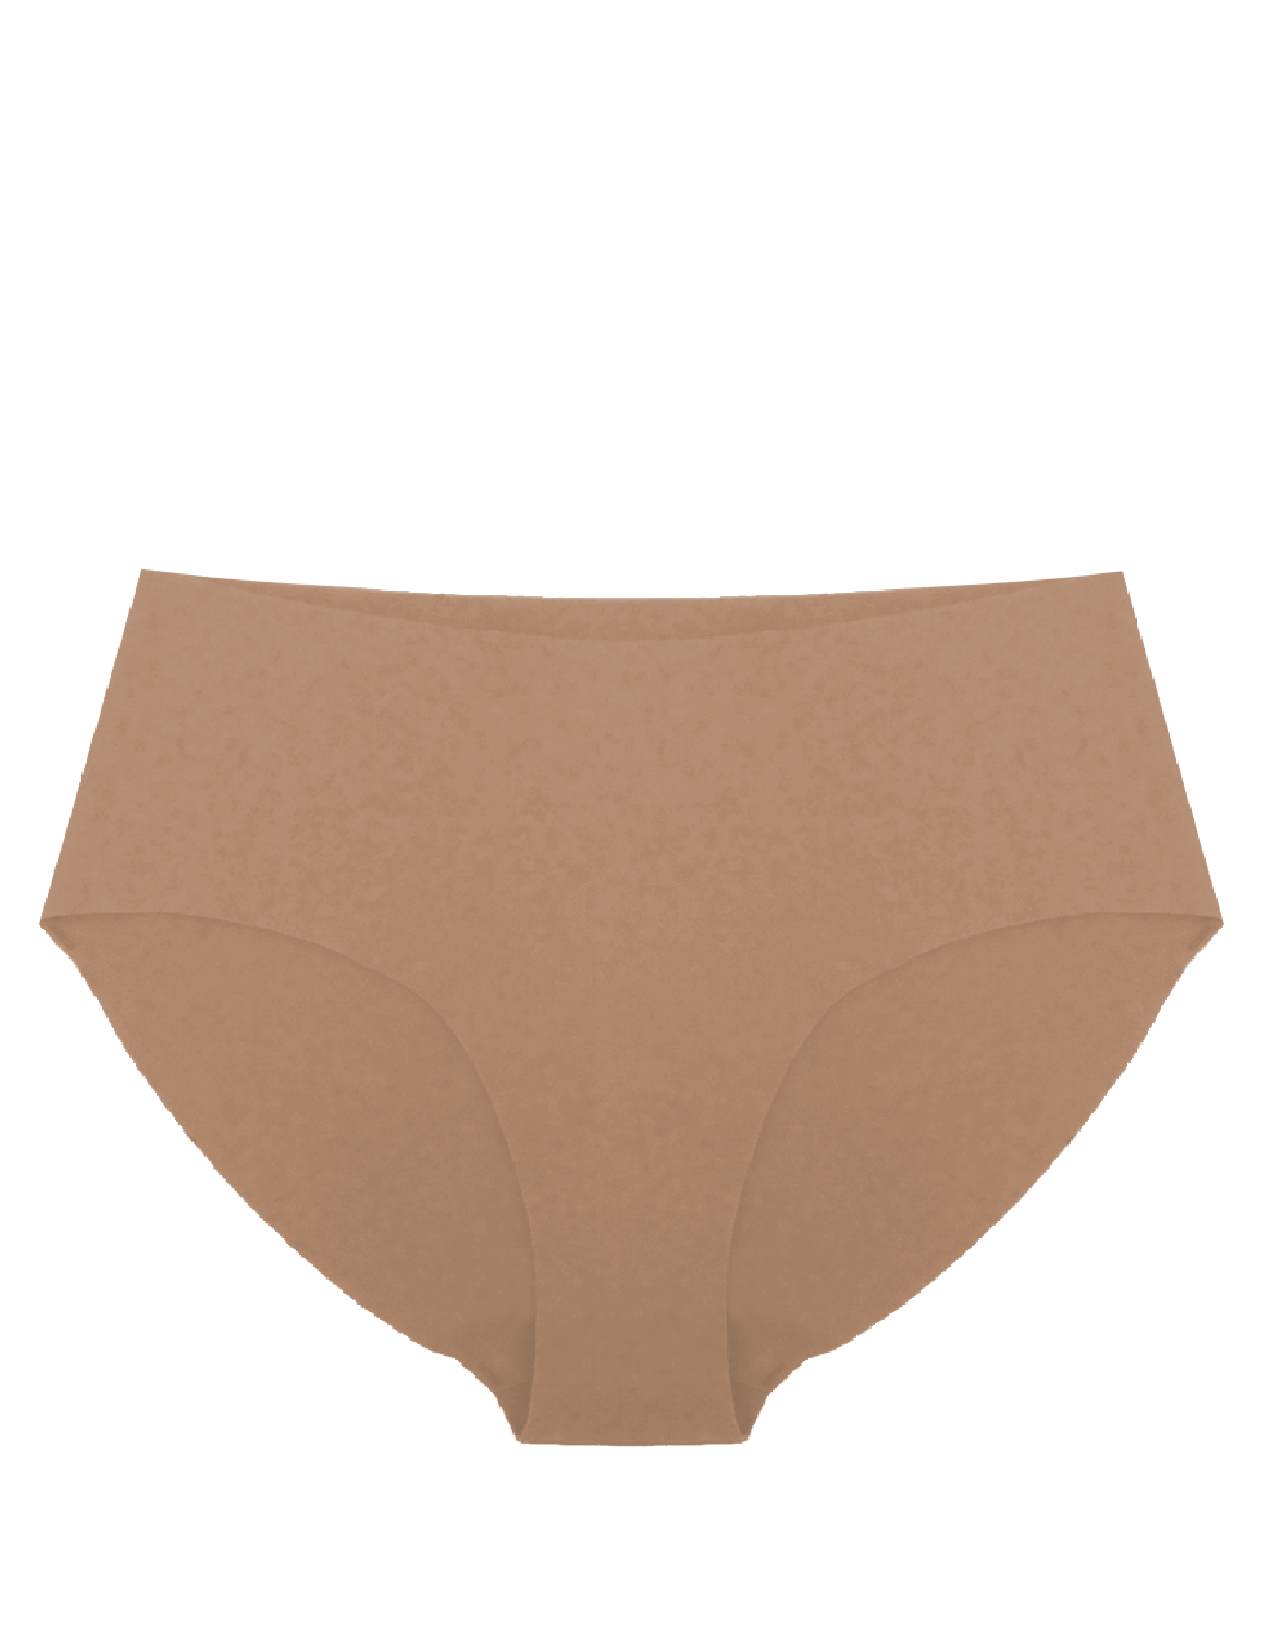 Girls Bikini Panties Sweatproof Underwear Mid Waist Stretch